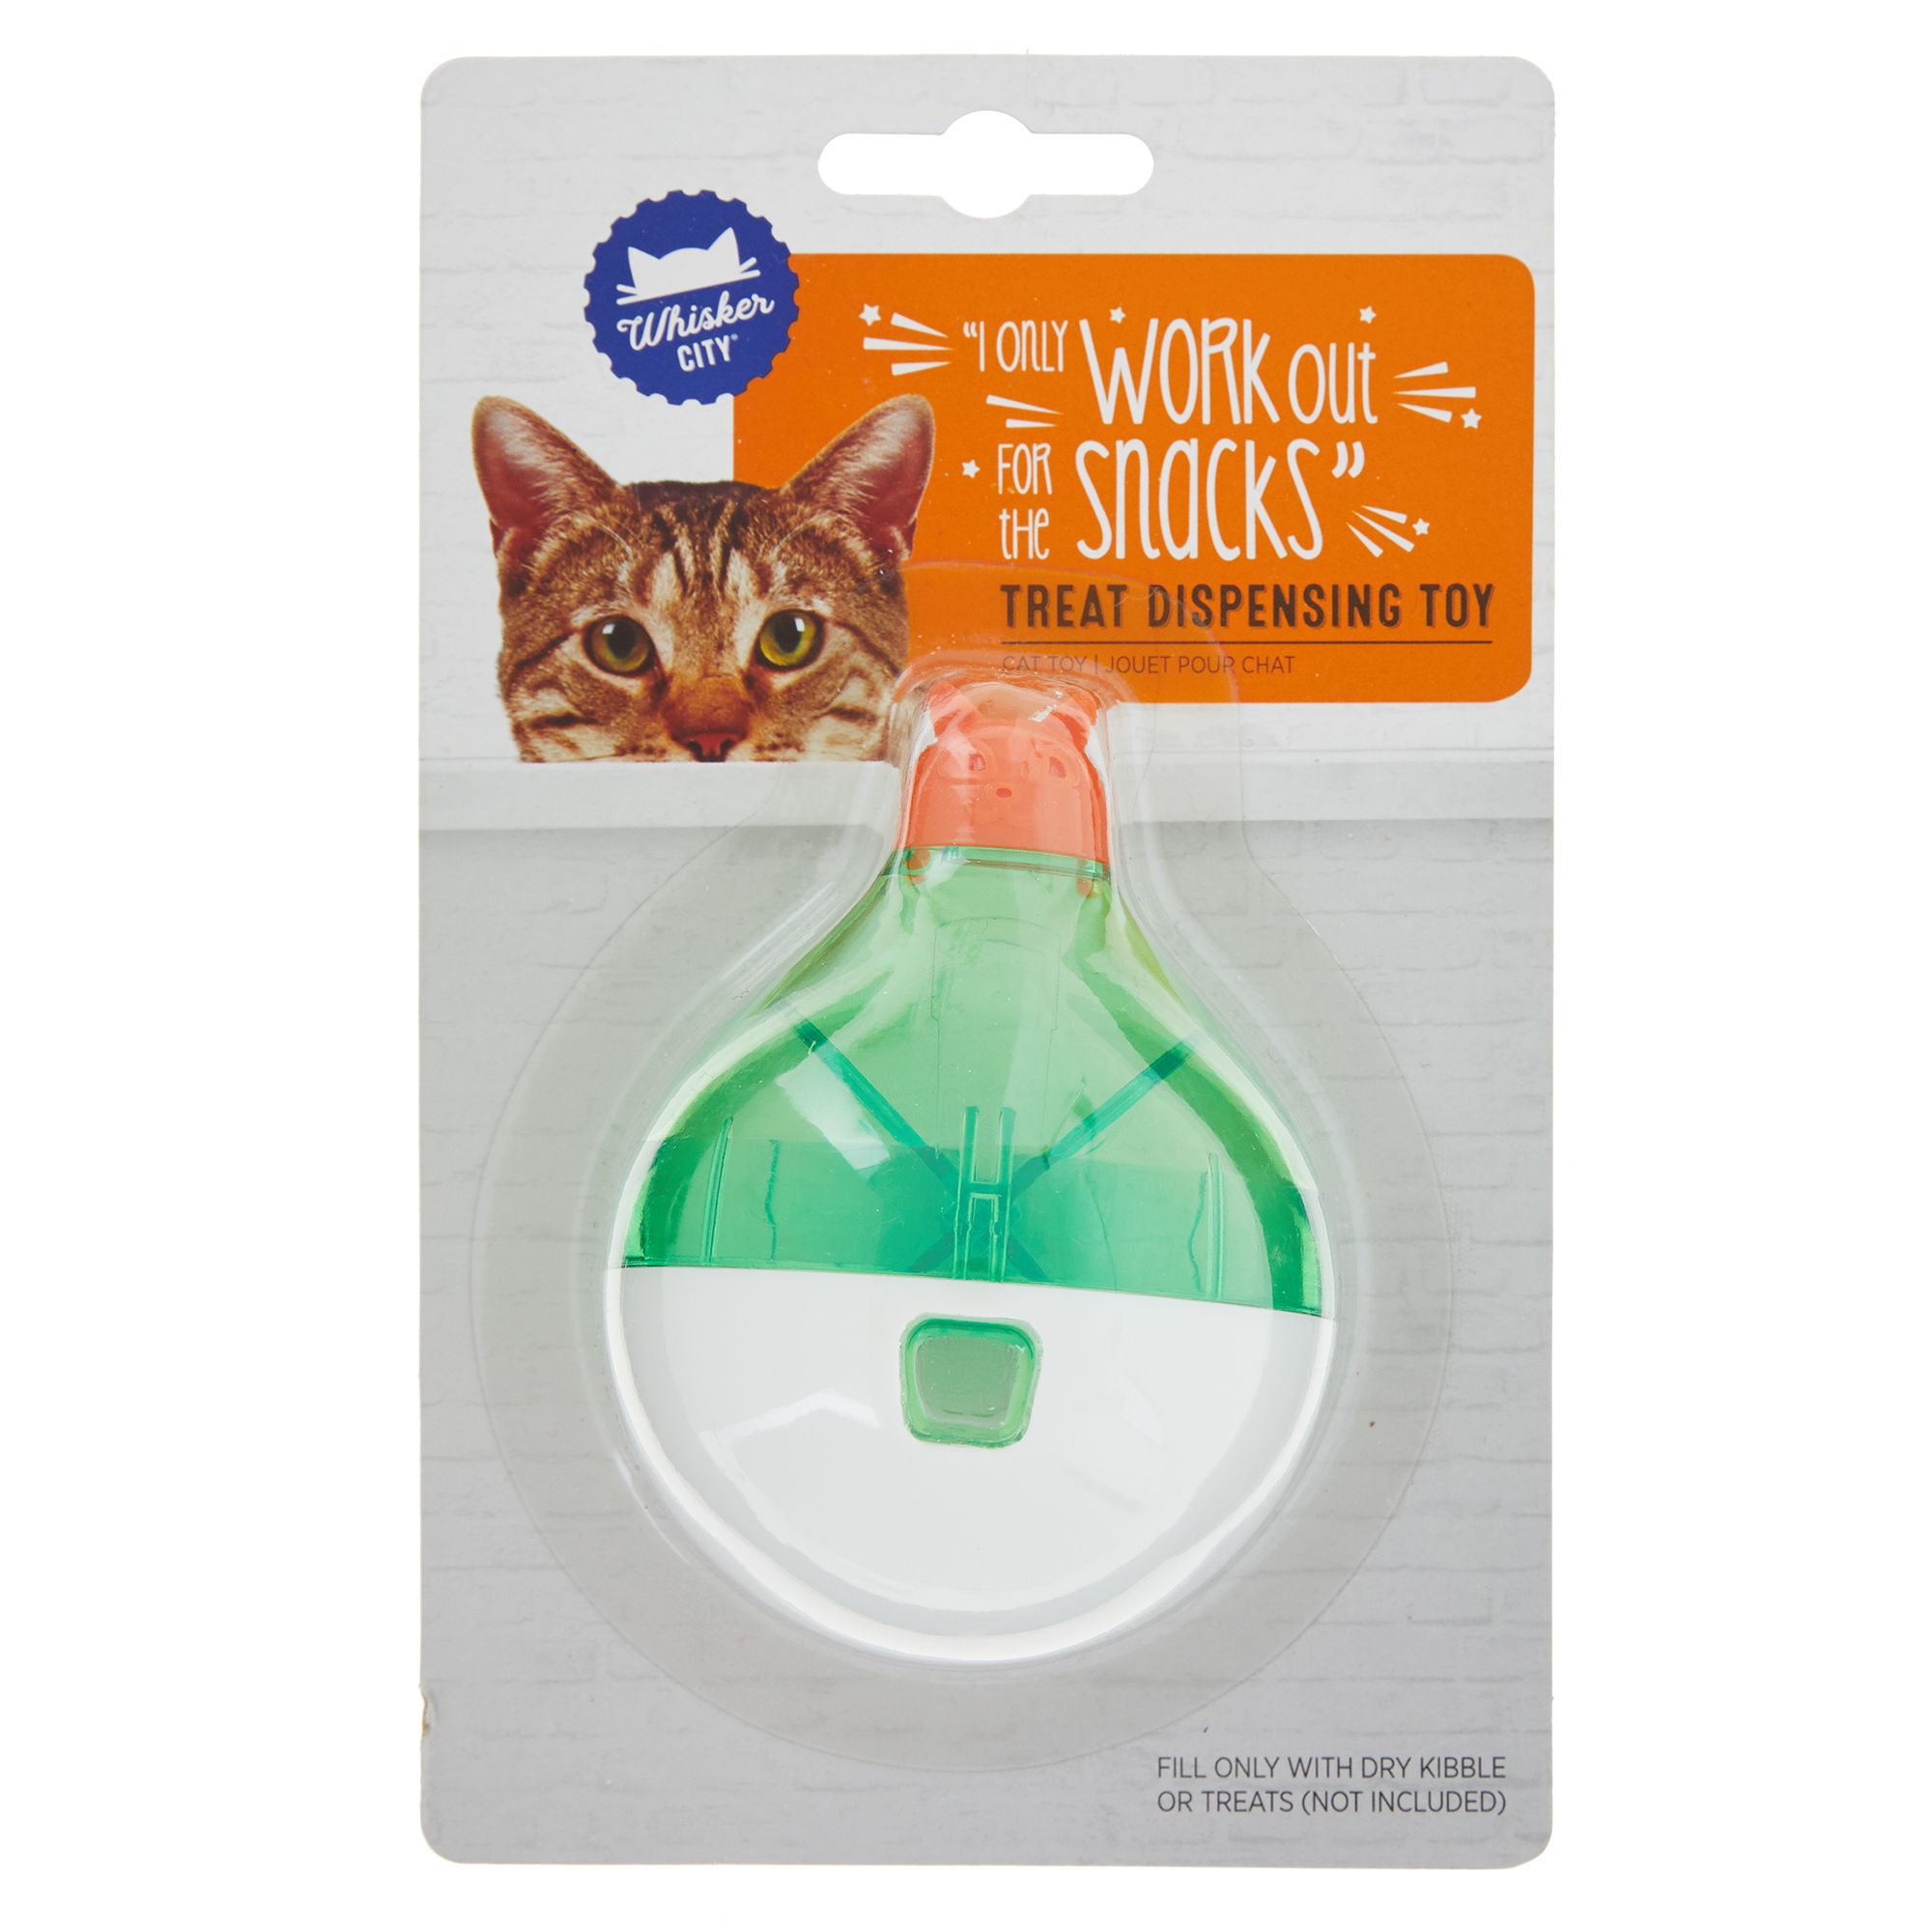 wobble cat toy